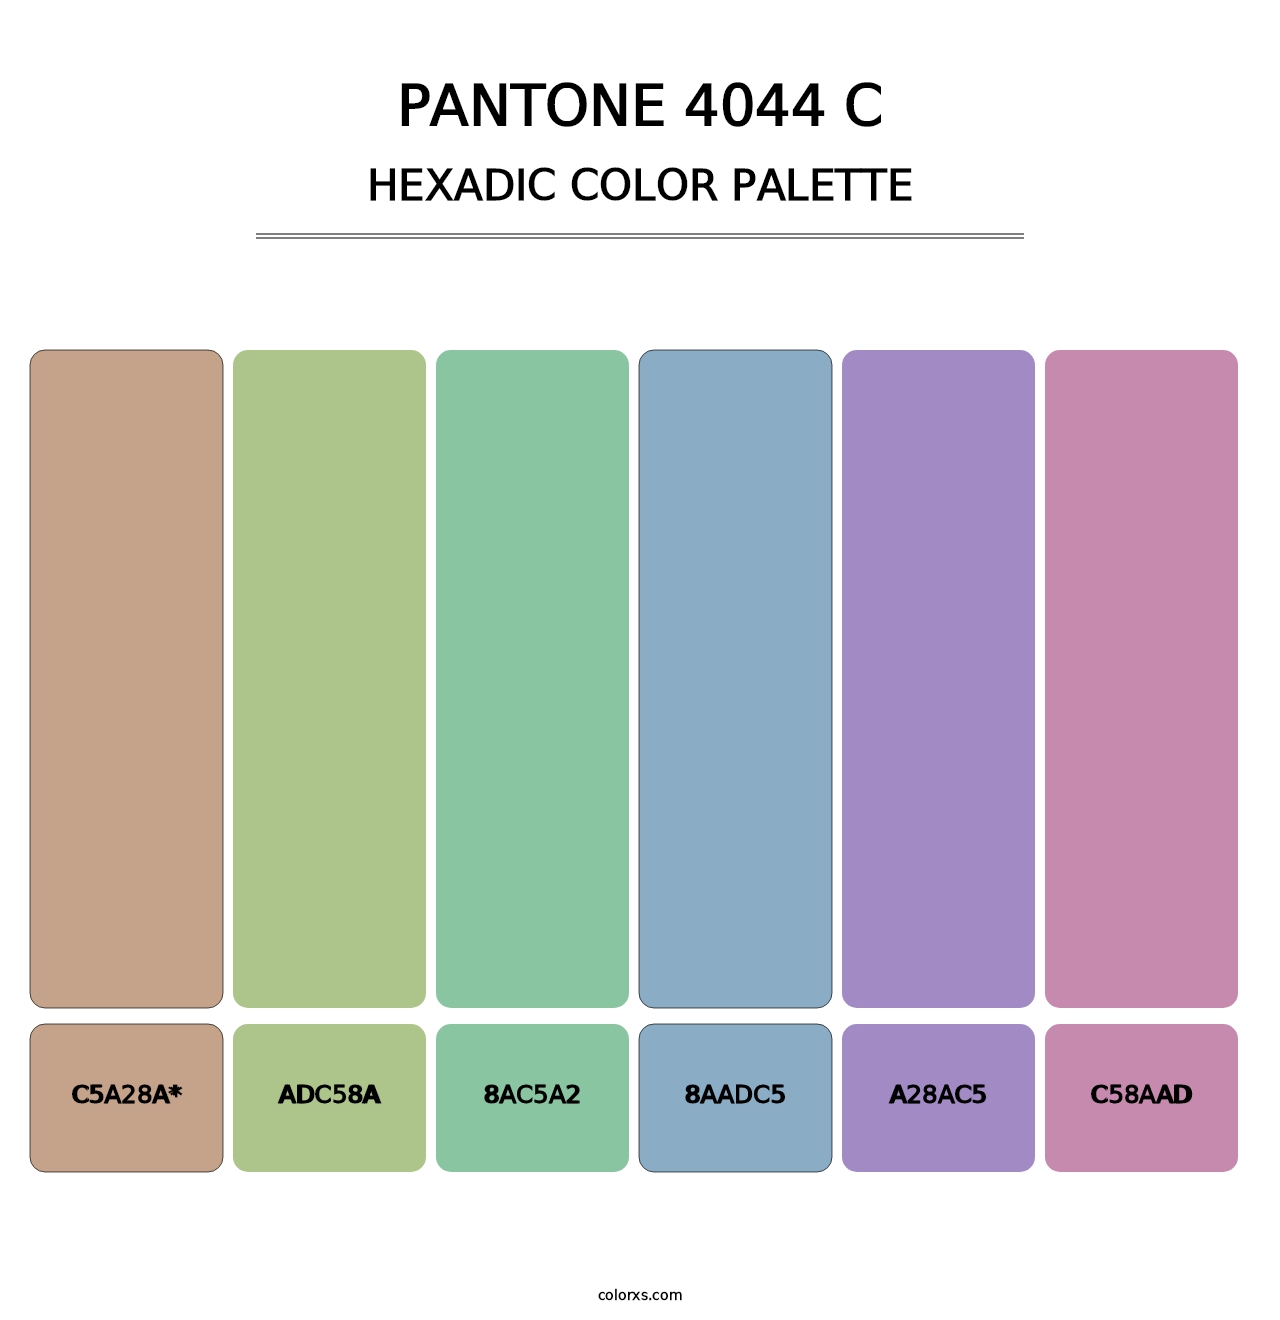 PANTONE 4044 C - Hexadic Color Palette